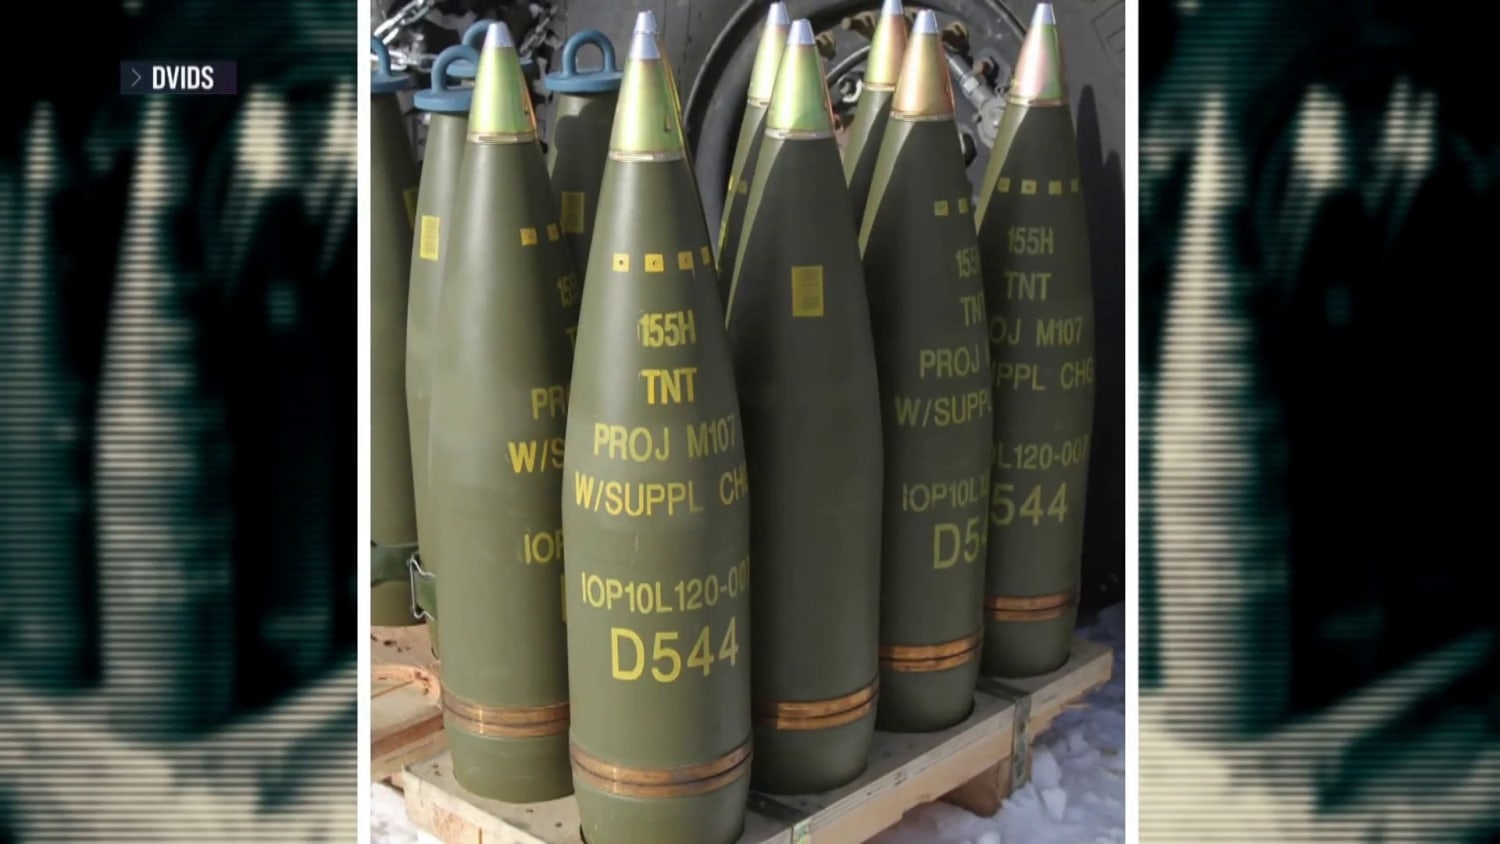 U.S. will send cluster bombs to Ukraine, Biden admin announces